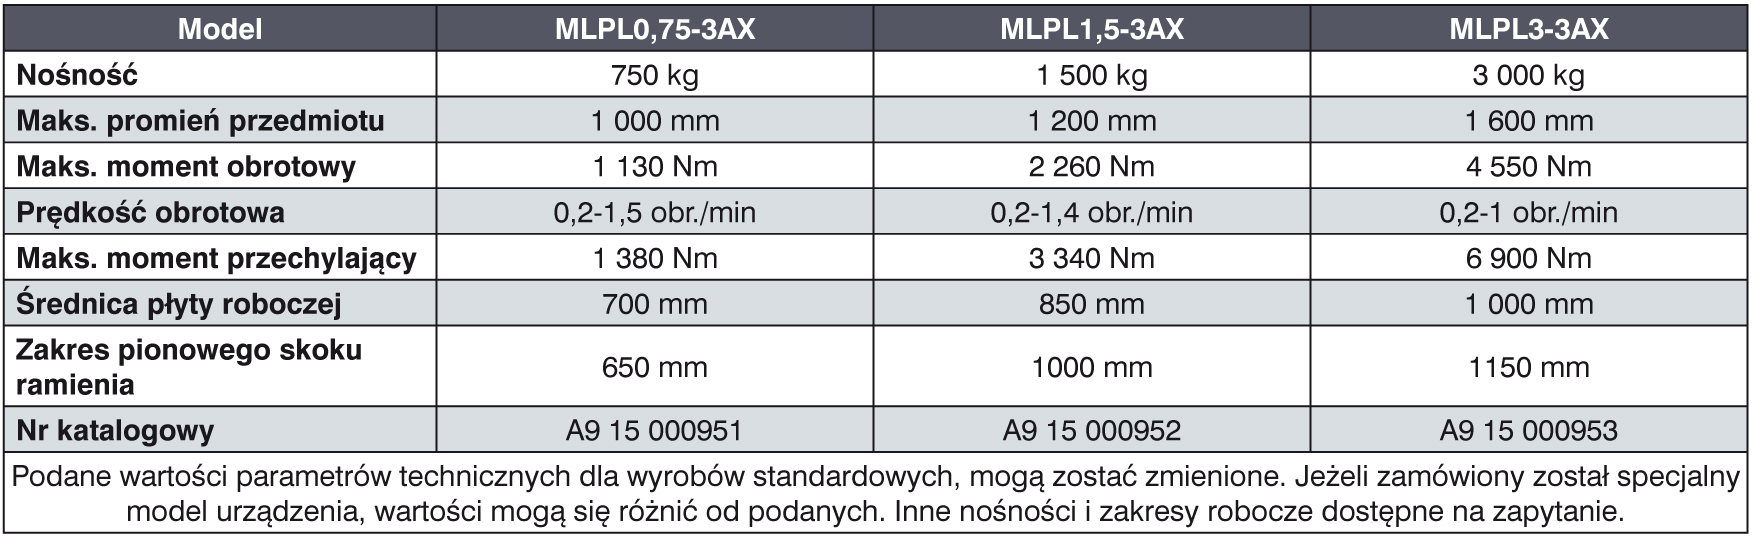 MLP 3 tabela